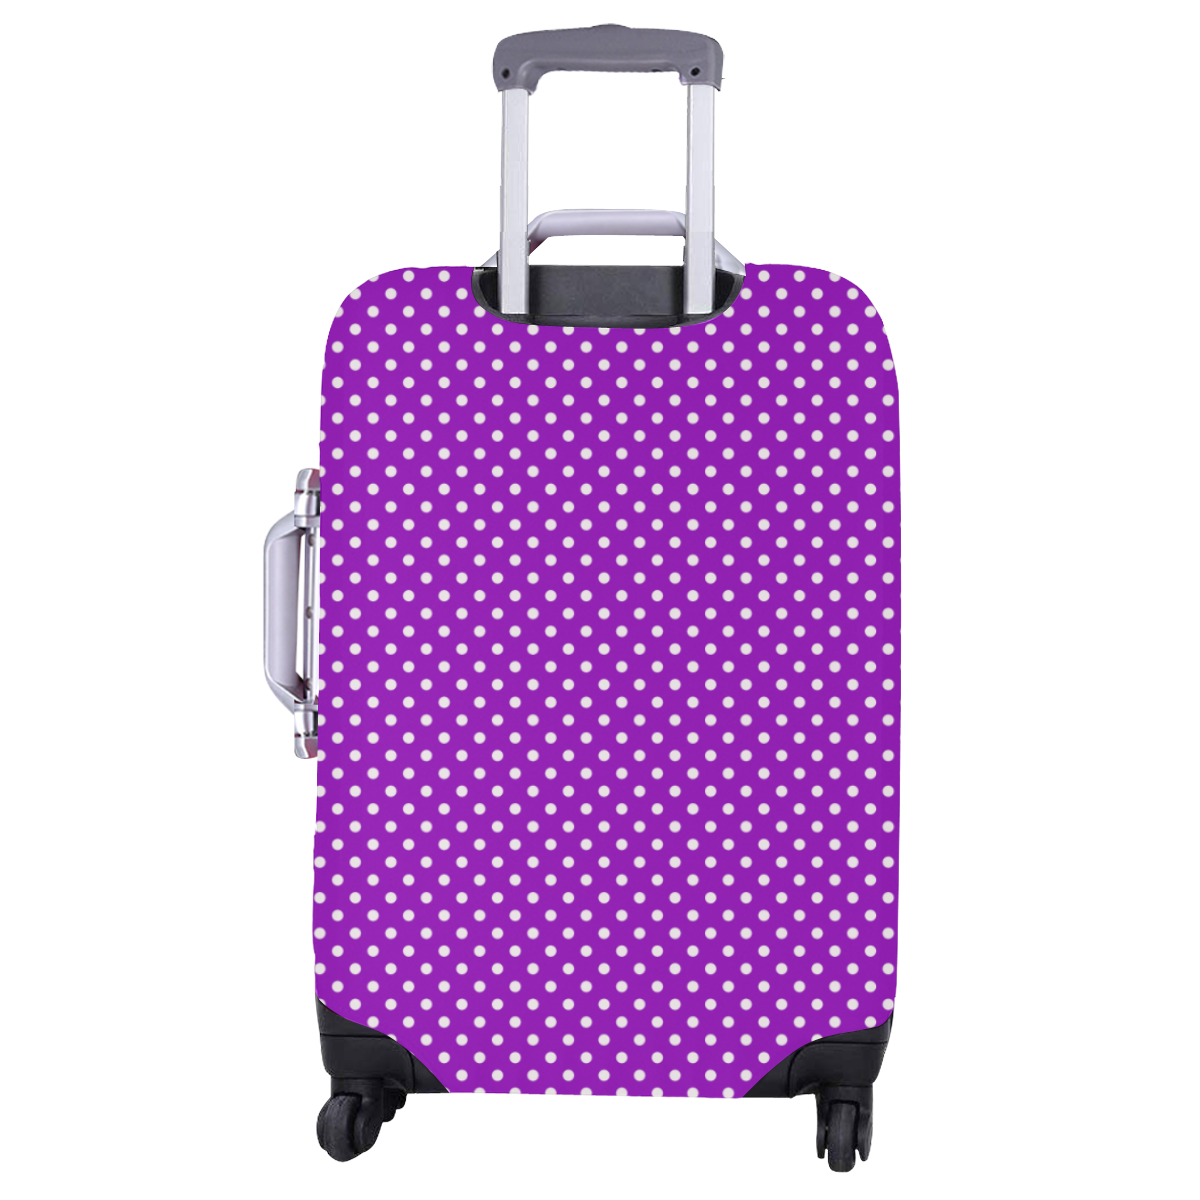 Lavander polka dots Luggage Cover/Large 26"-28"